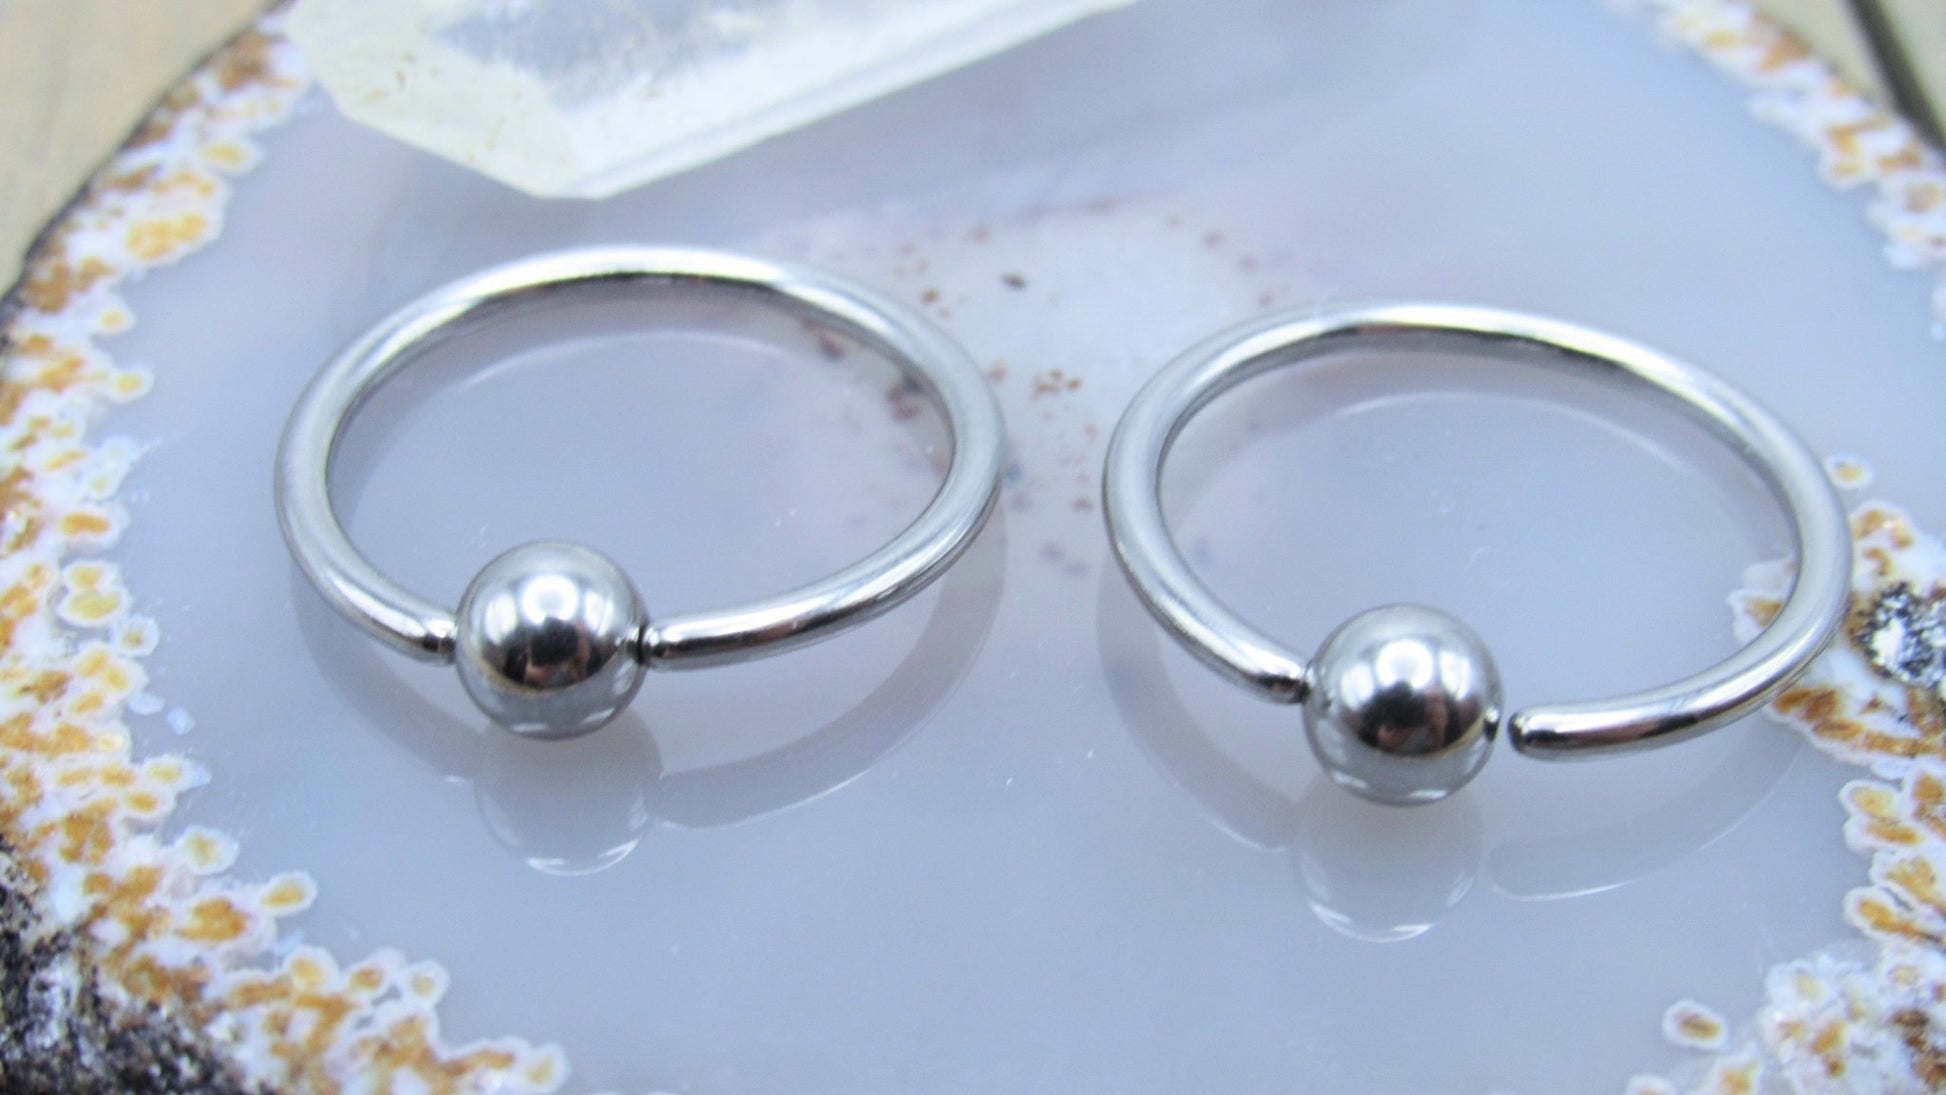 Stainless steel 14g 5/8" fixed bead ring ear nipple body piercing hoop set annealed easy bend - Siren Body Jewelry